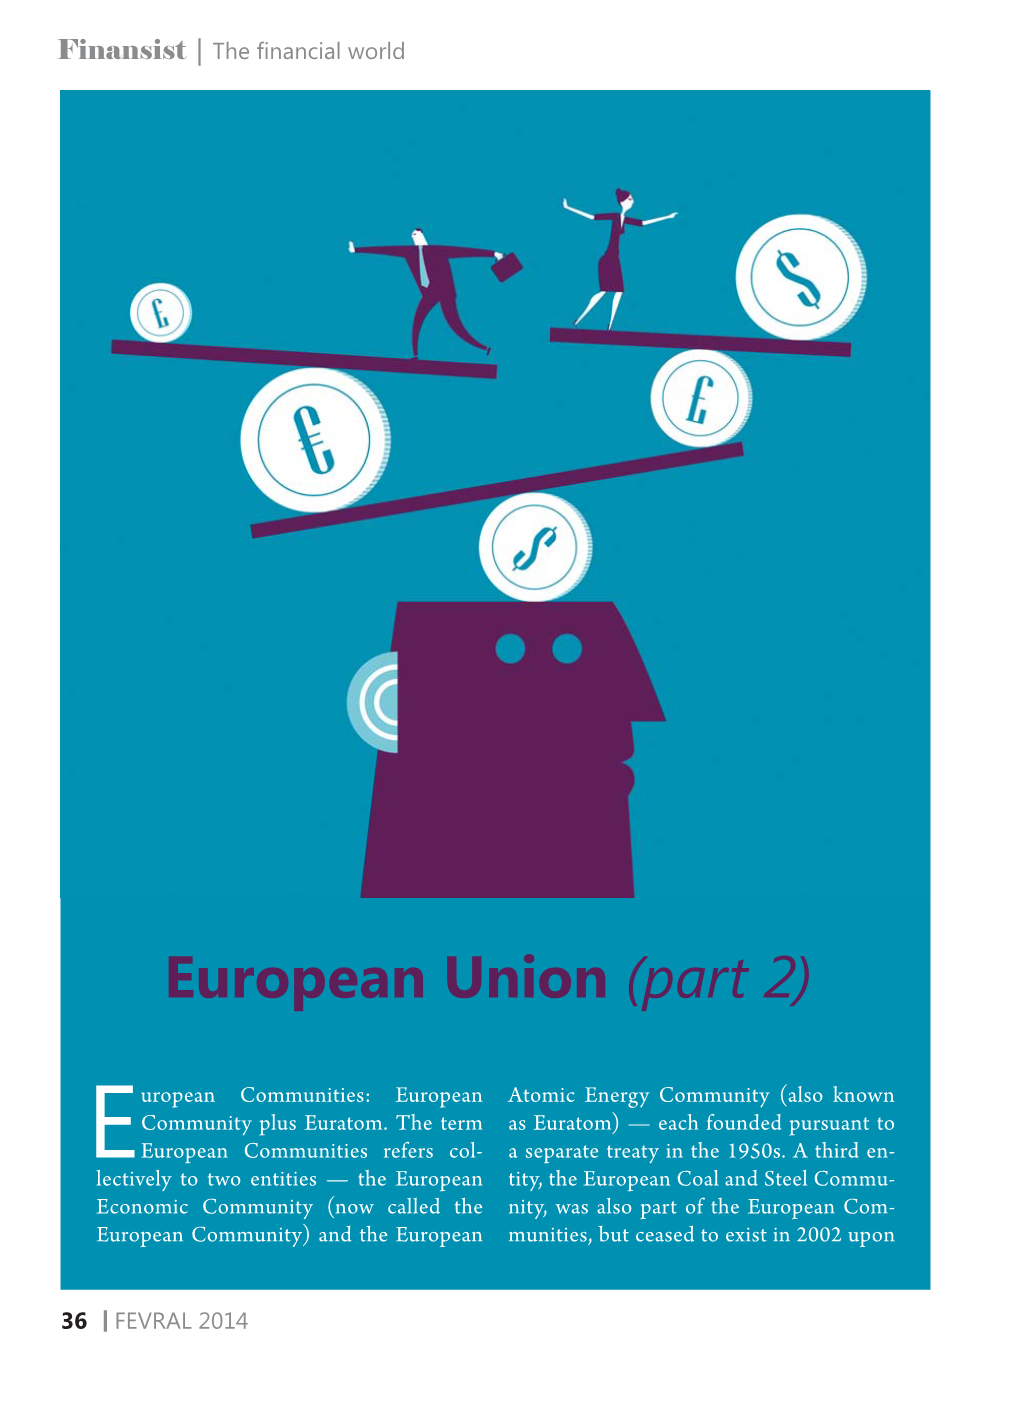 European Union (Part 2)